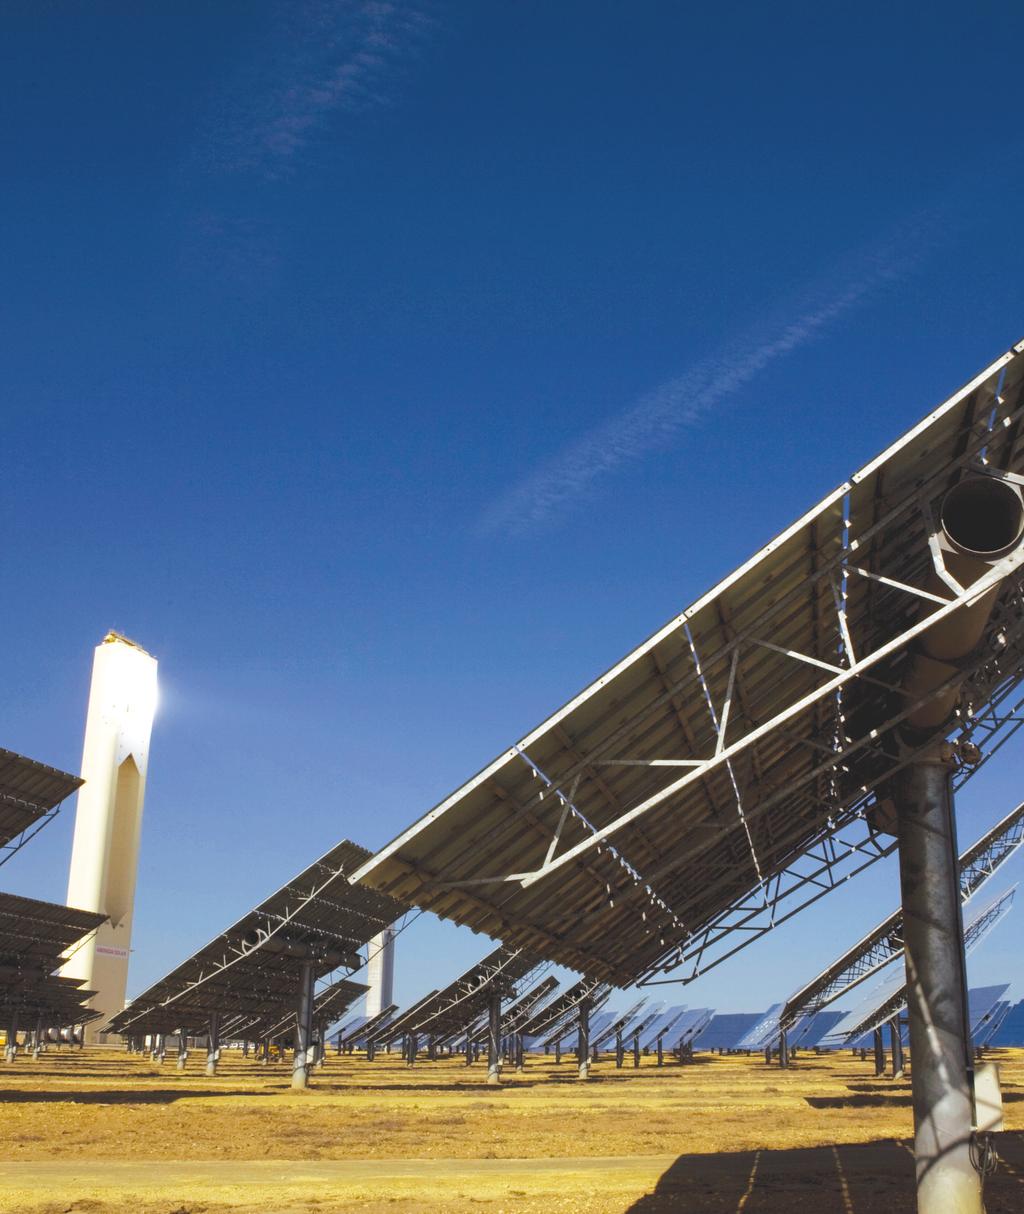 GREENPEACE/MARKEL REDONDO åéêüíá: ο ηλιοθερμικός σταθμός παραγωγής ενέργειας PS στη Σεβίλλη της Ισπανίας, χρησιμοποιεί μεγάλους κινούμενους καθρέφτες, που λέγονται ηλιοστάτες.